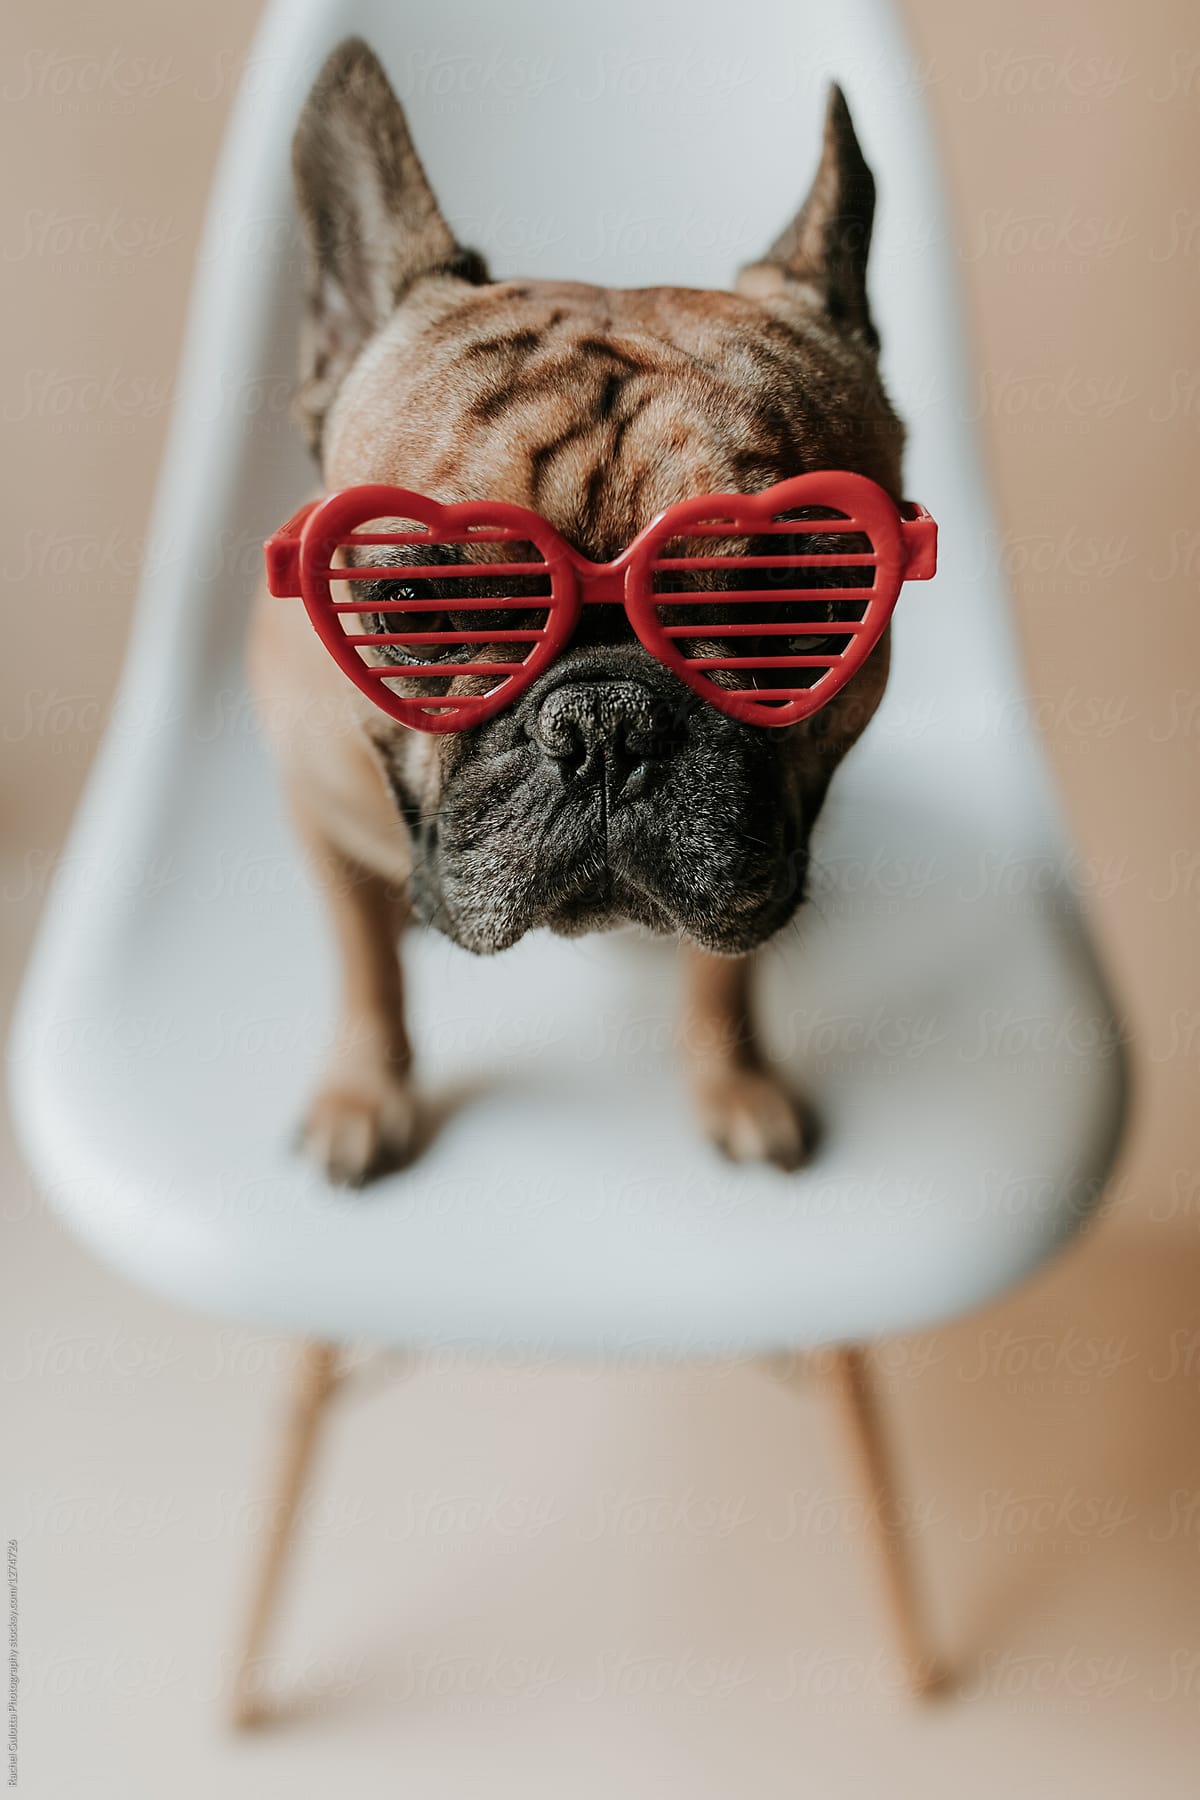 french bulldog sunglasses